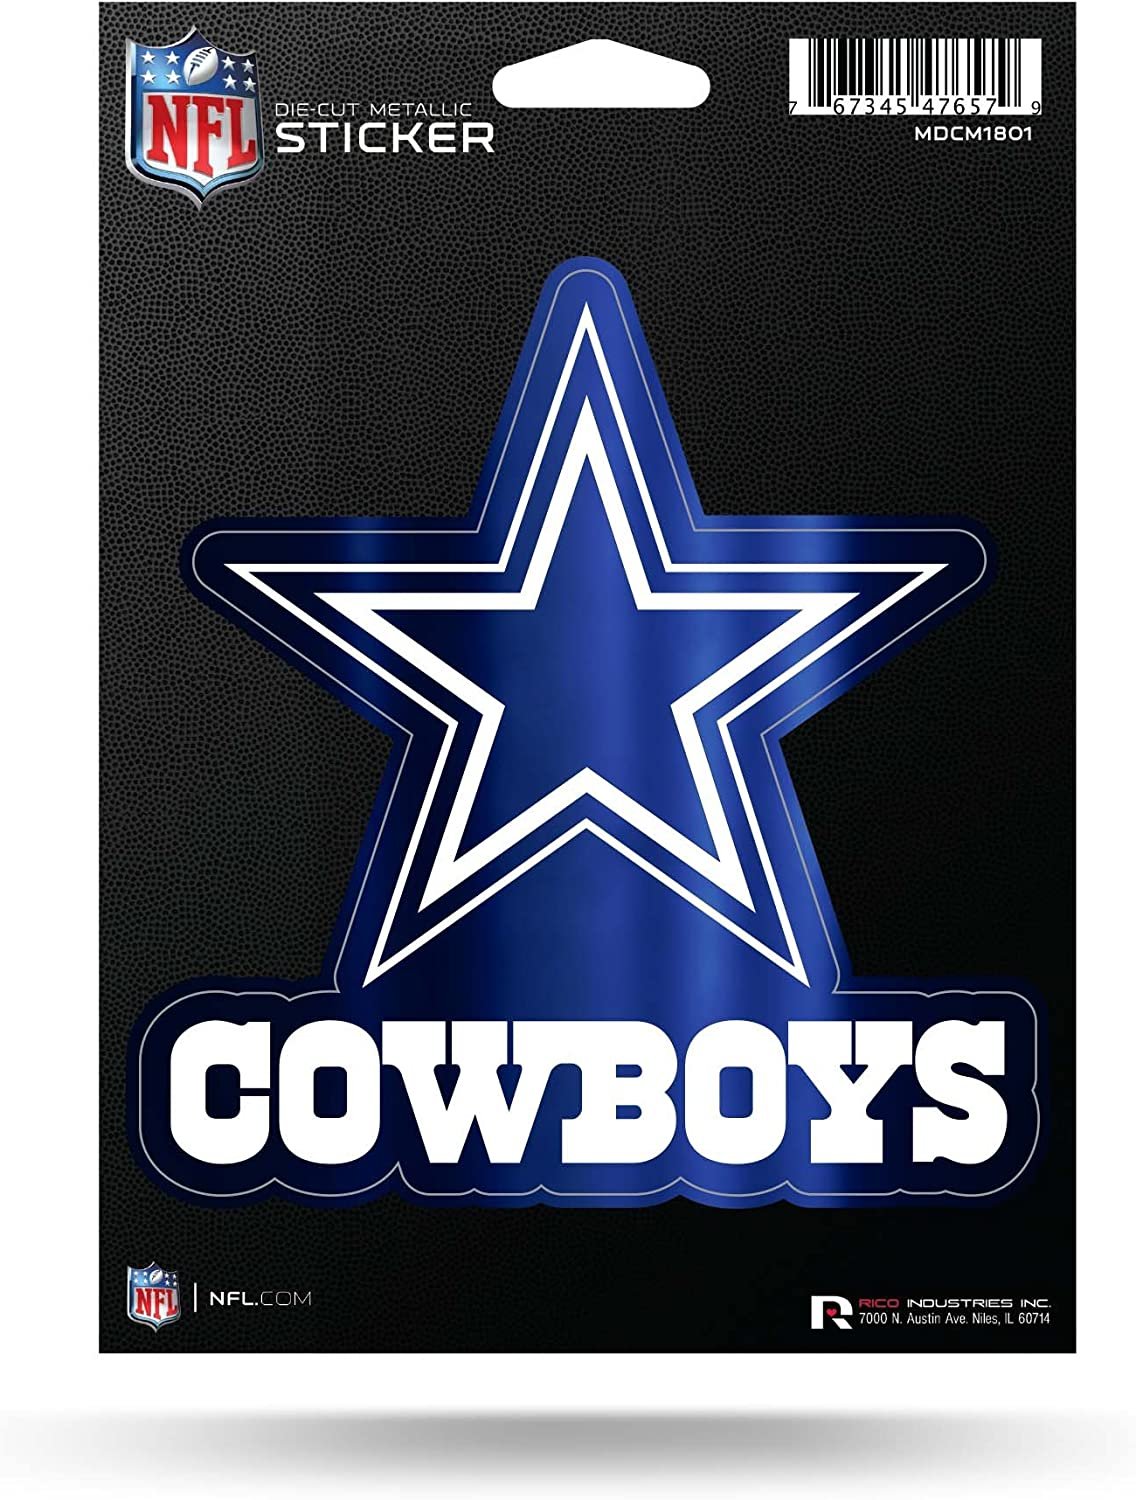 Dallas Cowboys 5 Inch Die Cut Flat Vinyl Decal Sticker Chrome Metallic Shimmer Design Adhesive Backing